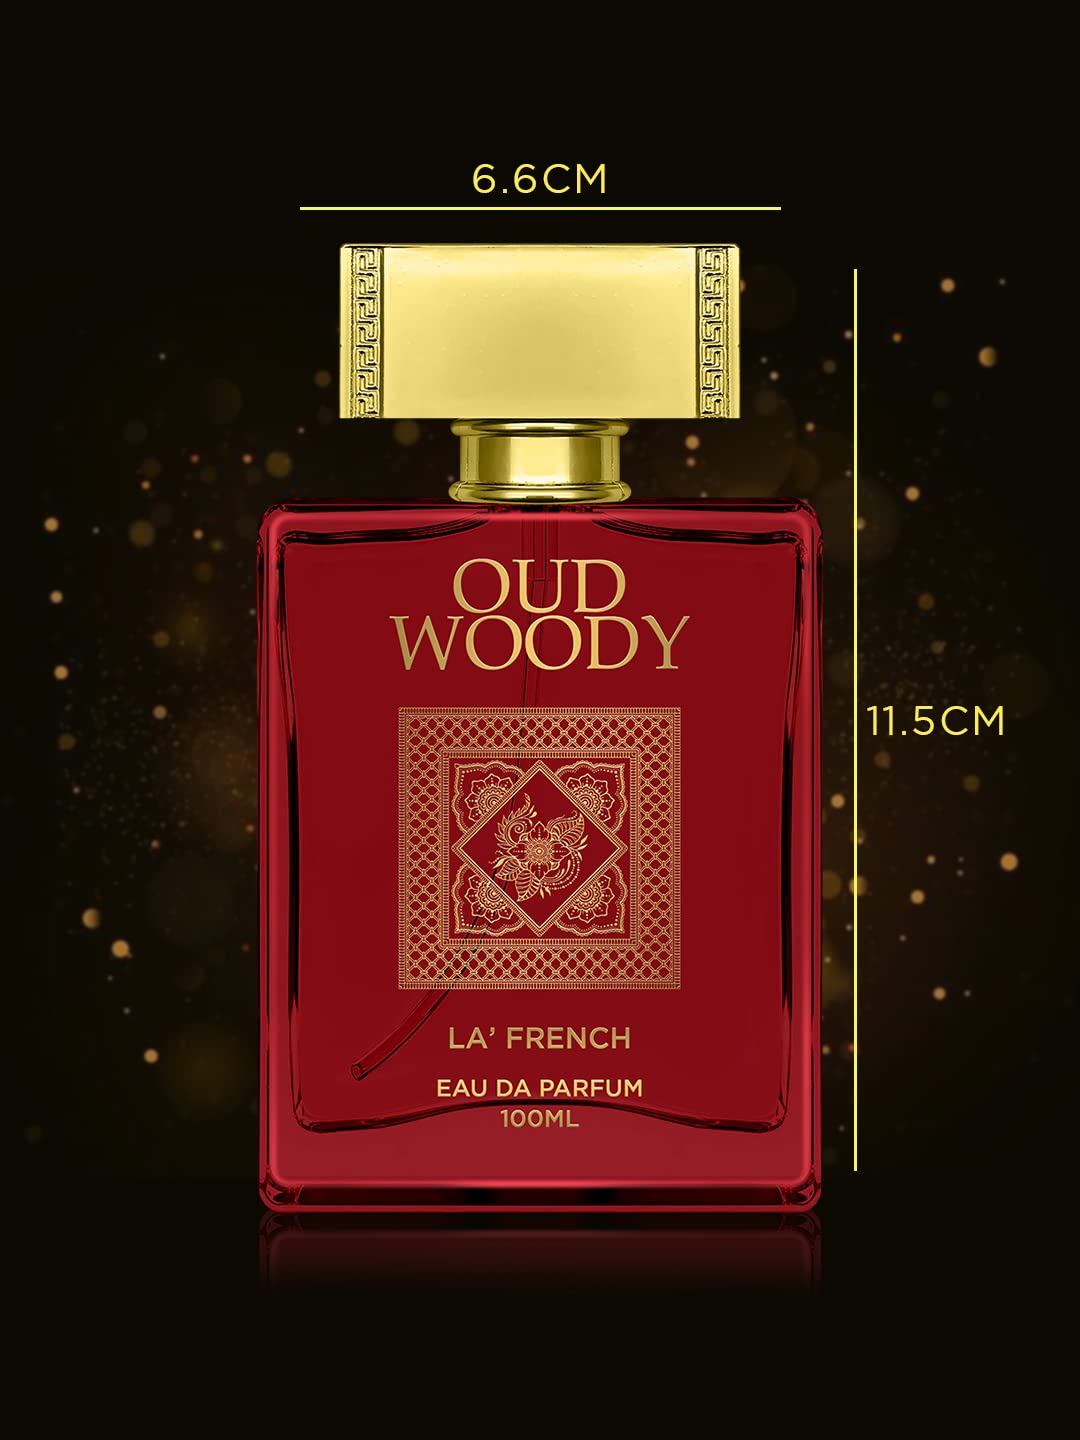 La French Oud Woody Eau De Parfum Unisex Perfume for Men & Women | with Sandalwood Agarwood & Woody | Long Lasting EDP Fragrance Scent, 100 Ml